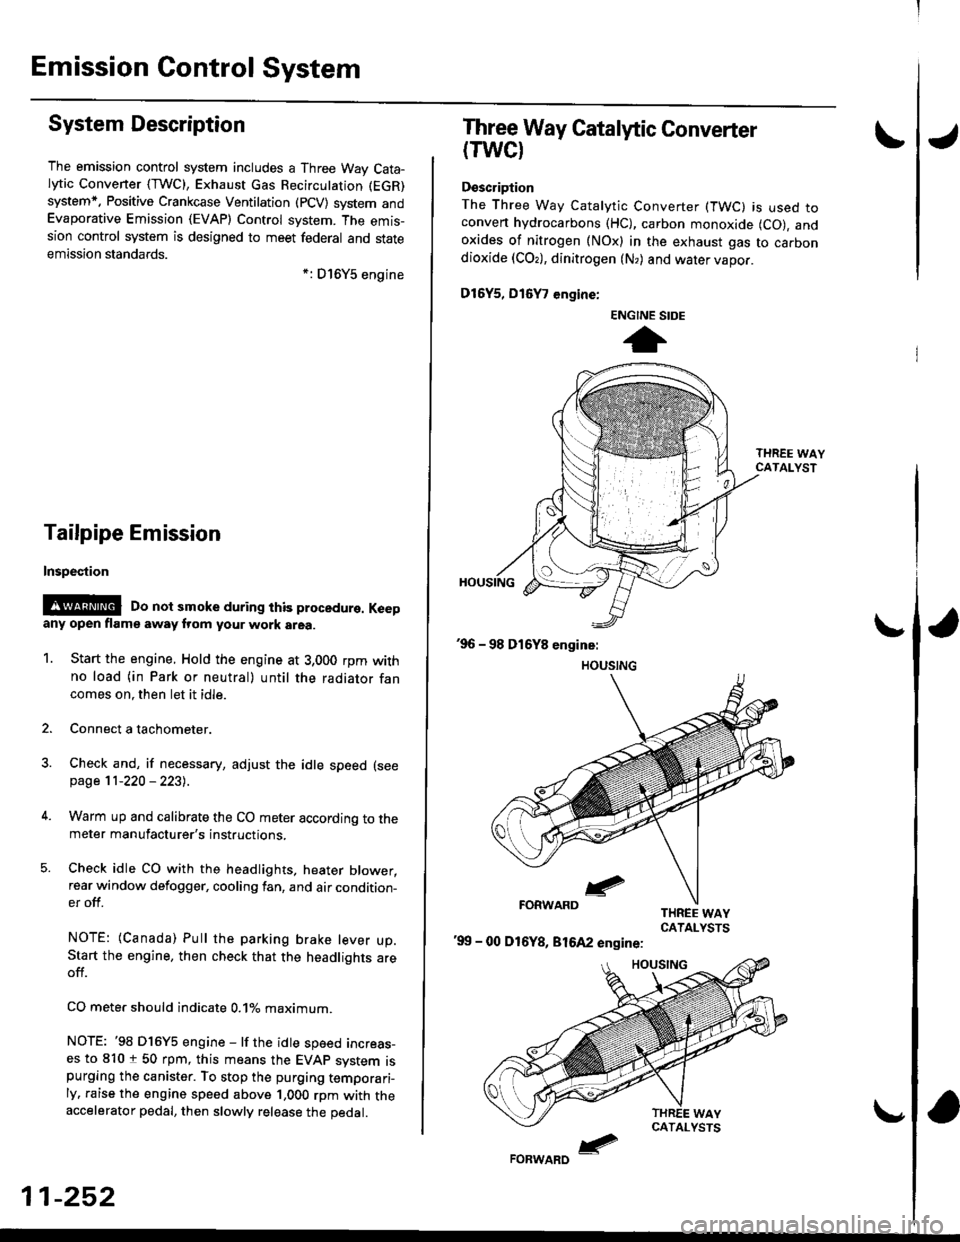 HONDA CIVIC 1997 6.G Workshop Manual Emission Gontrol System
System Description
The emission control system includes a Three Way Cata-lytic Convener (TWC), Exhaust Gas Recirculation (EGR)
system,. Positive Crankcase Ventilation (pCV) sys